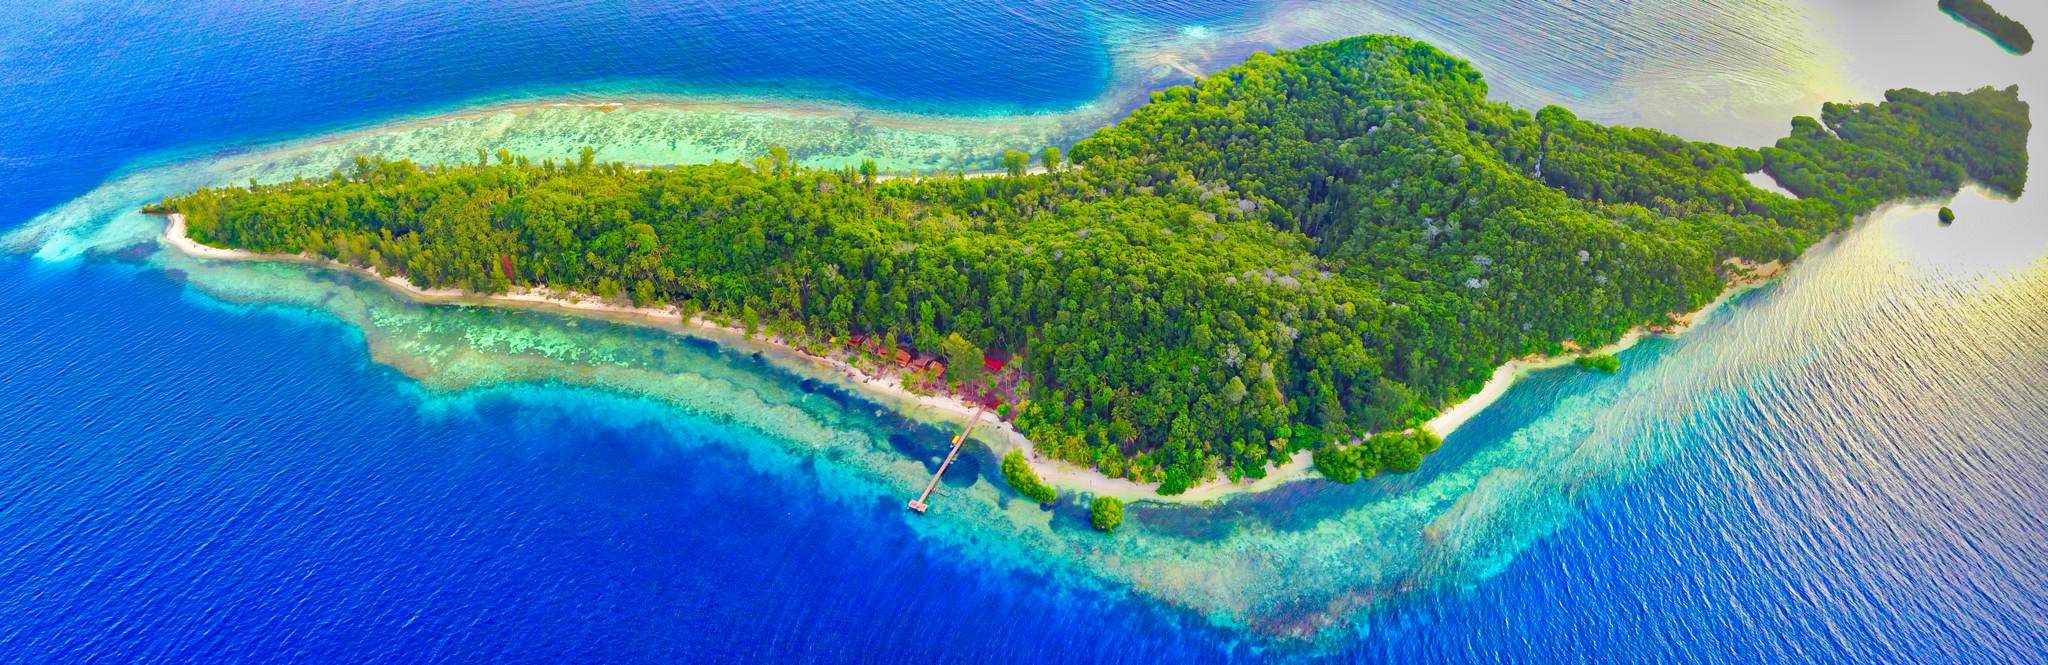 Yeben Island aerial picture with the amazing reef around, Raja Ampat